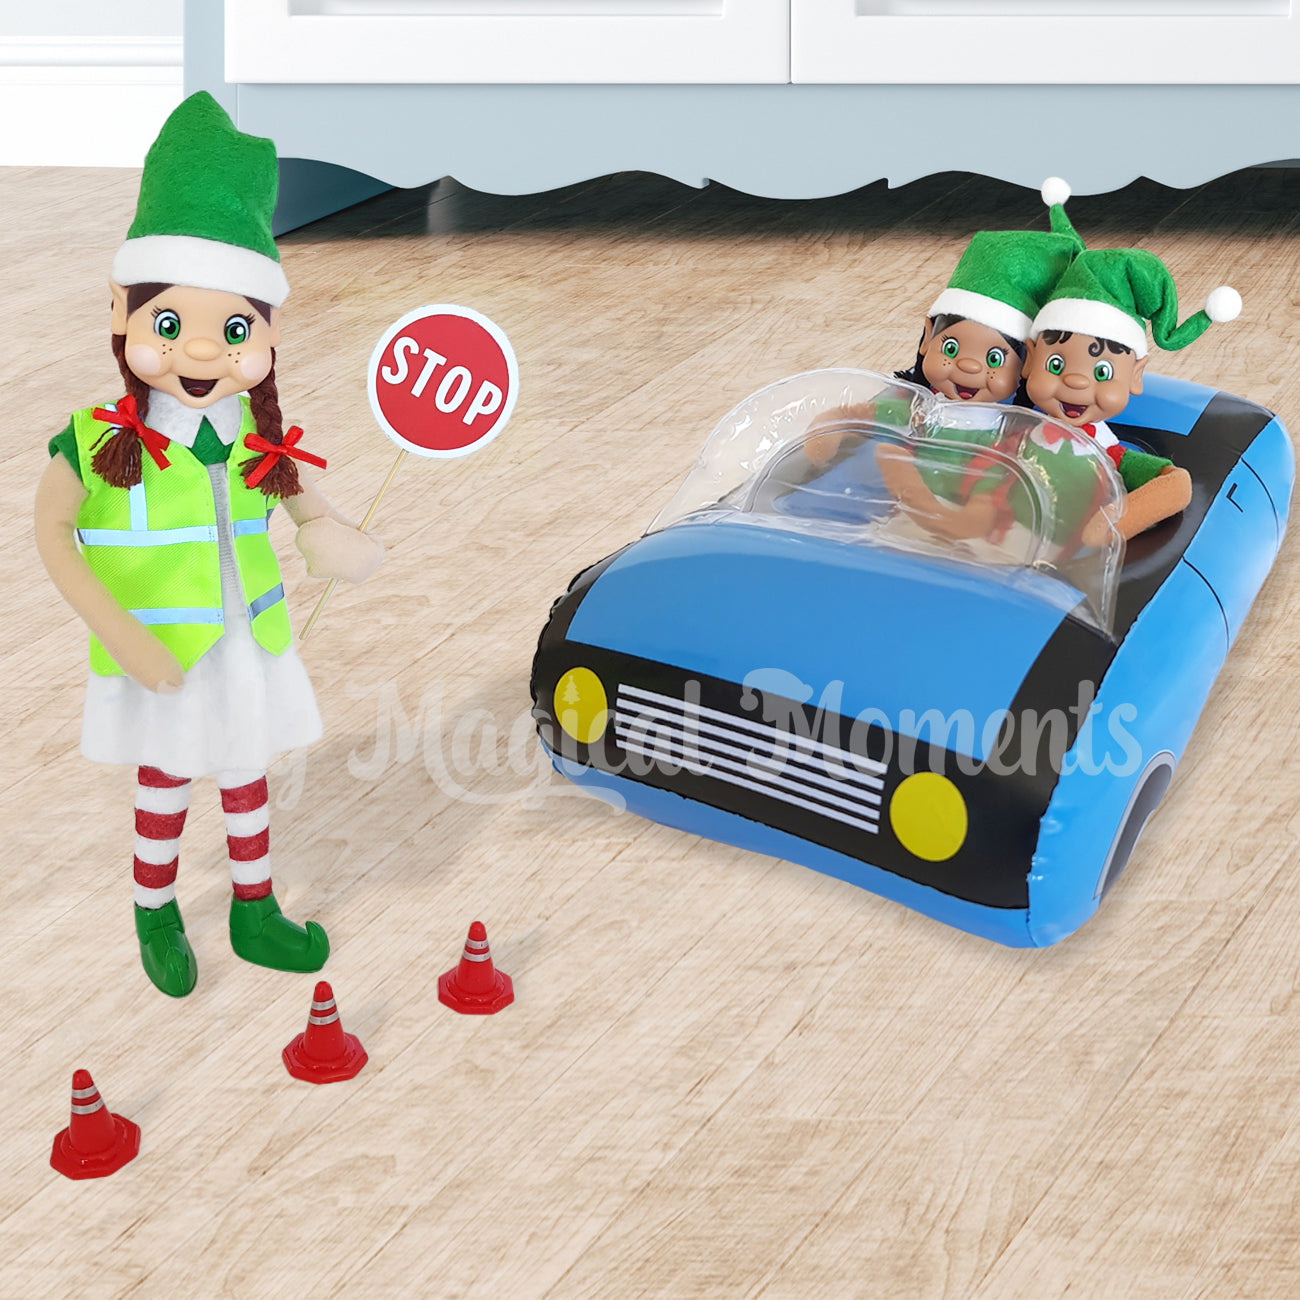 Roadworker dressed elf stopping traffic elves driving a blue car